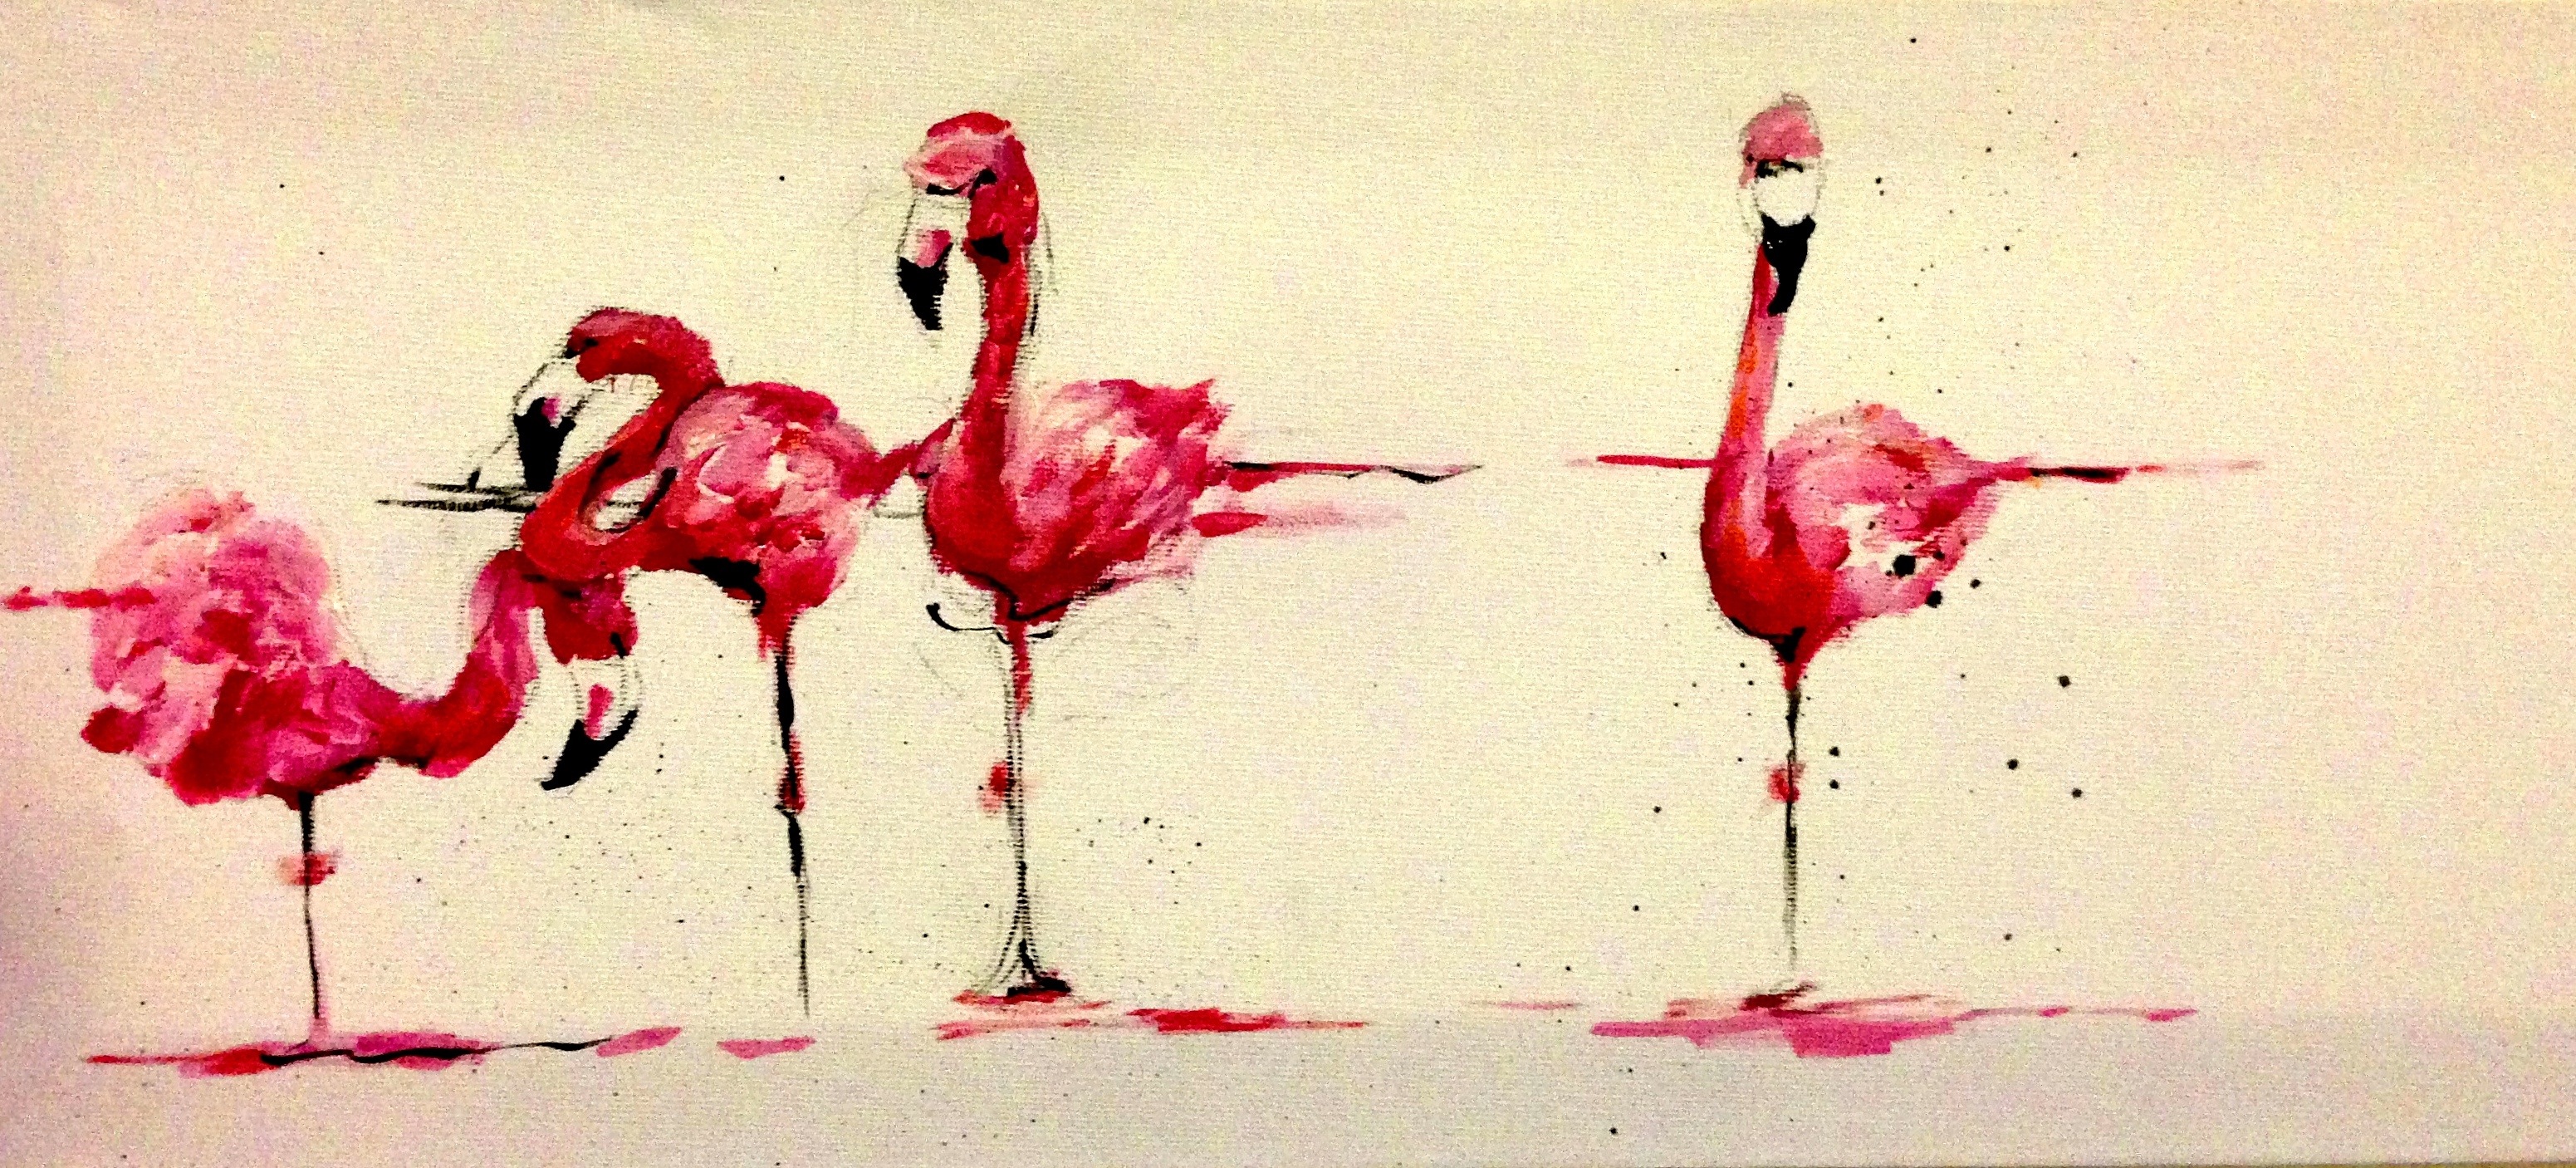 beautiful flamingo painting